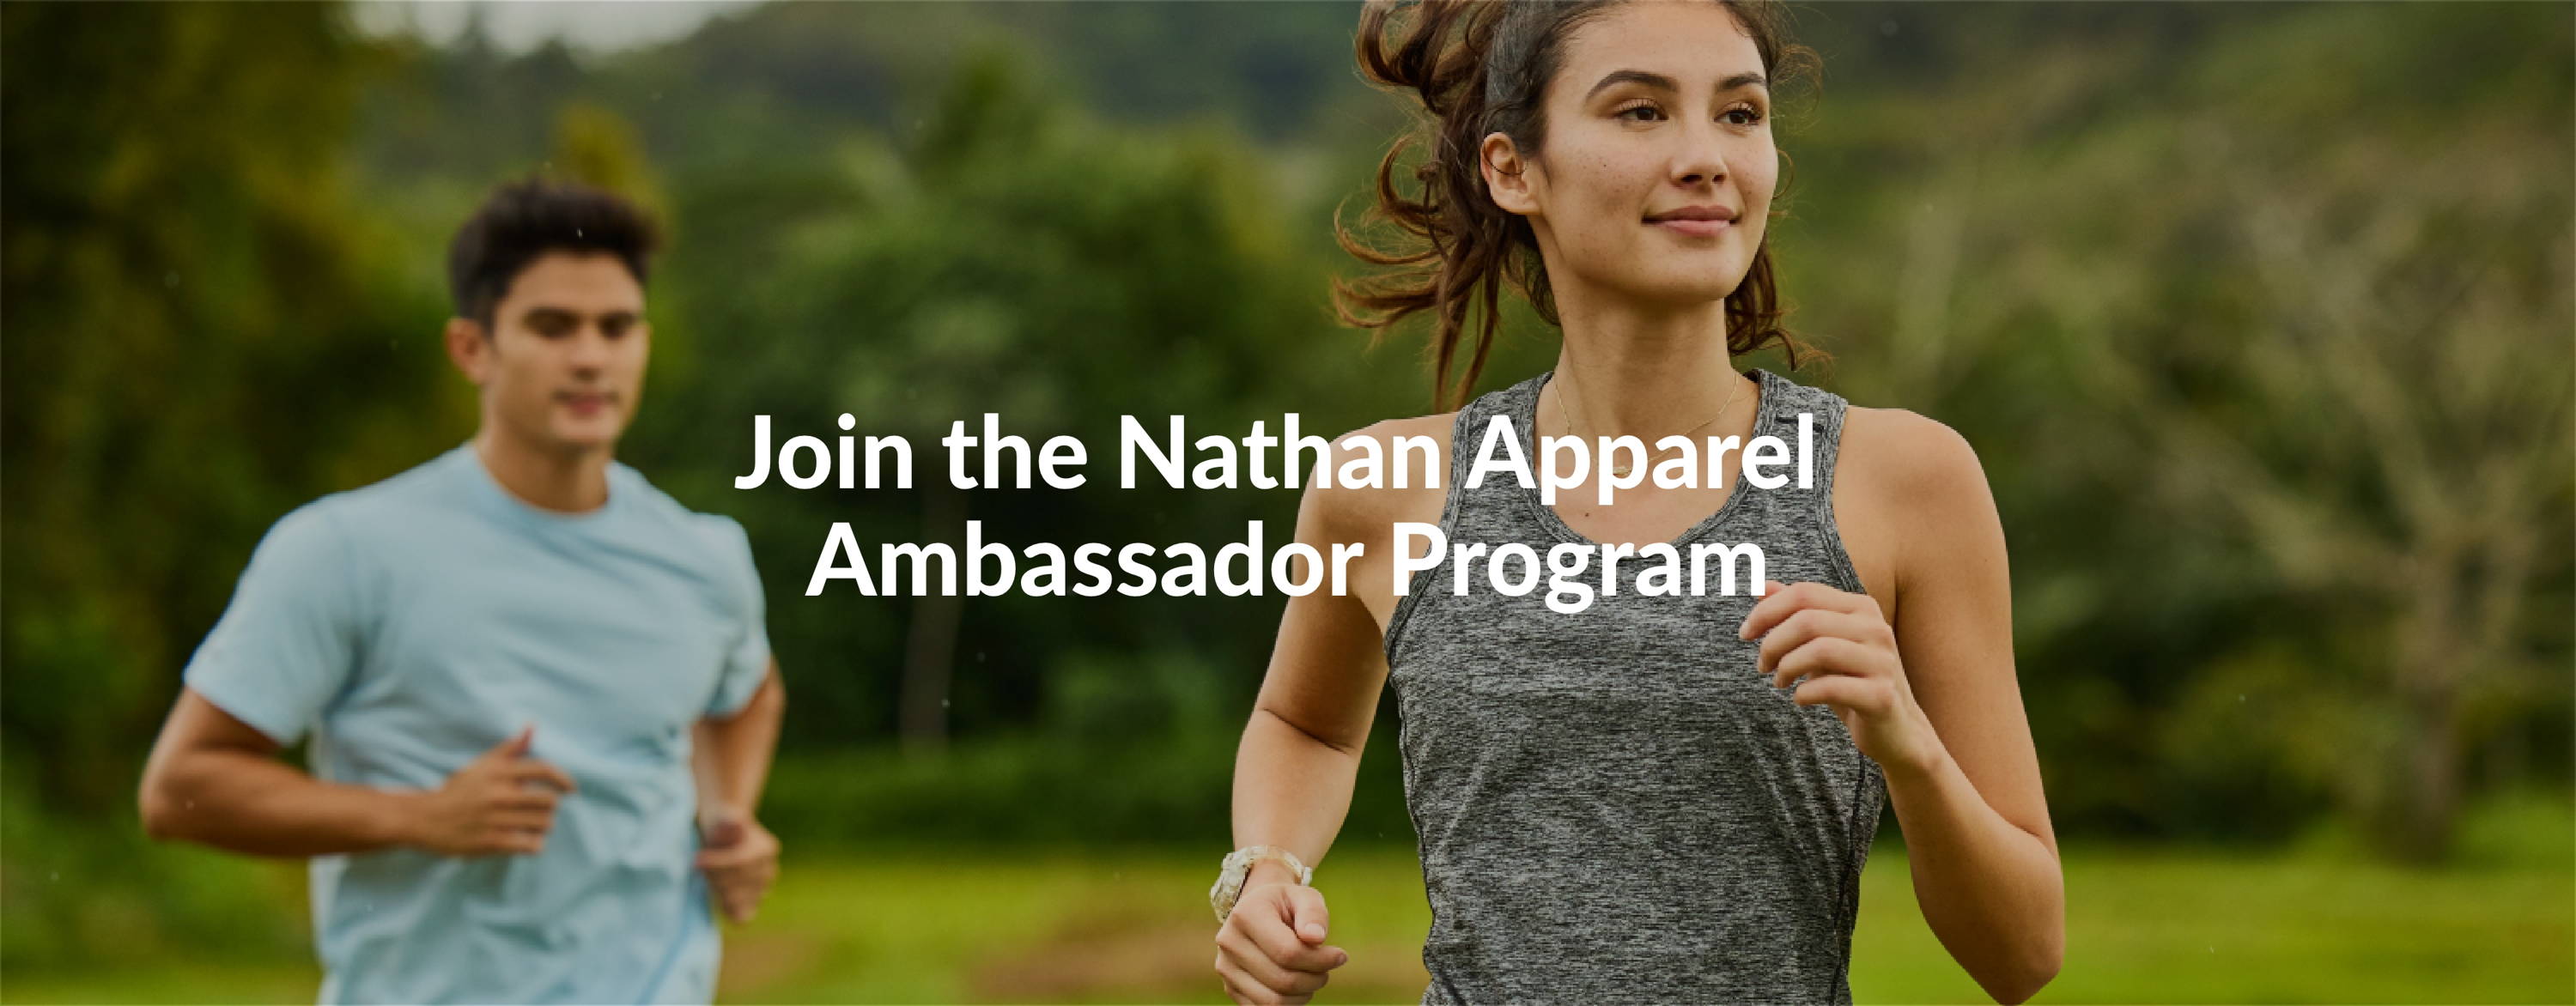 Join the Nathan Apparel Ambassador Program